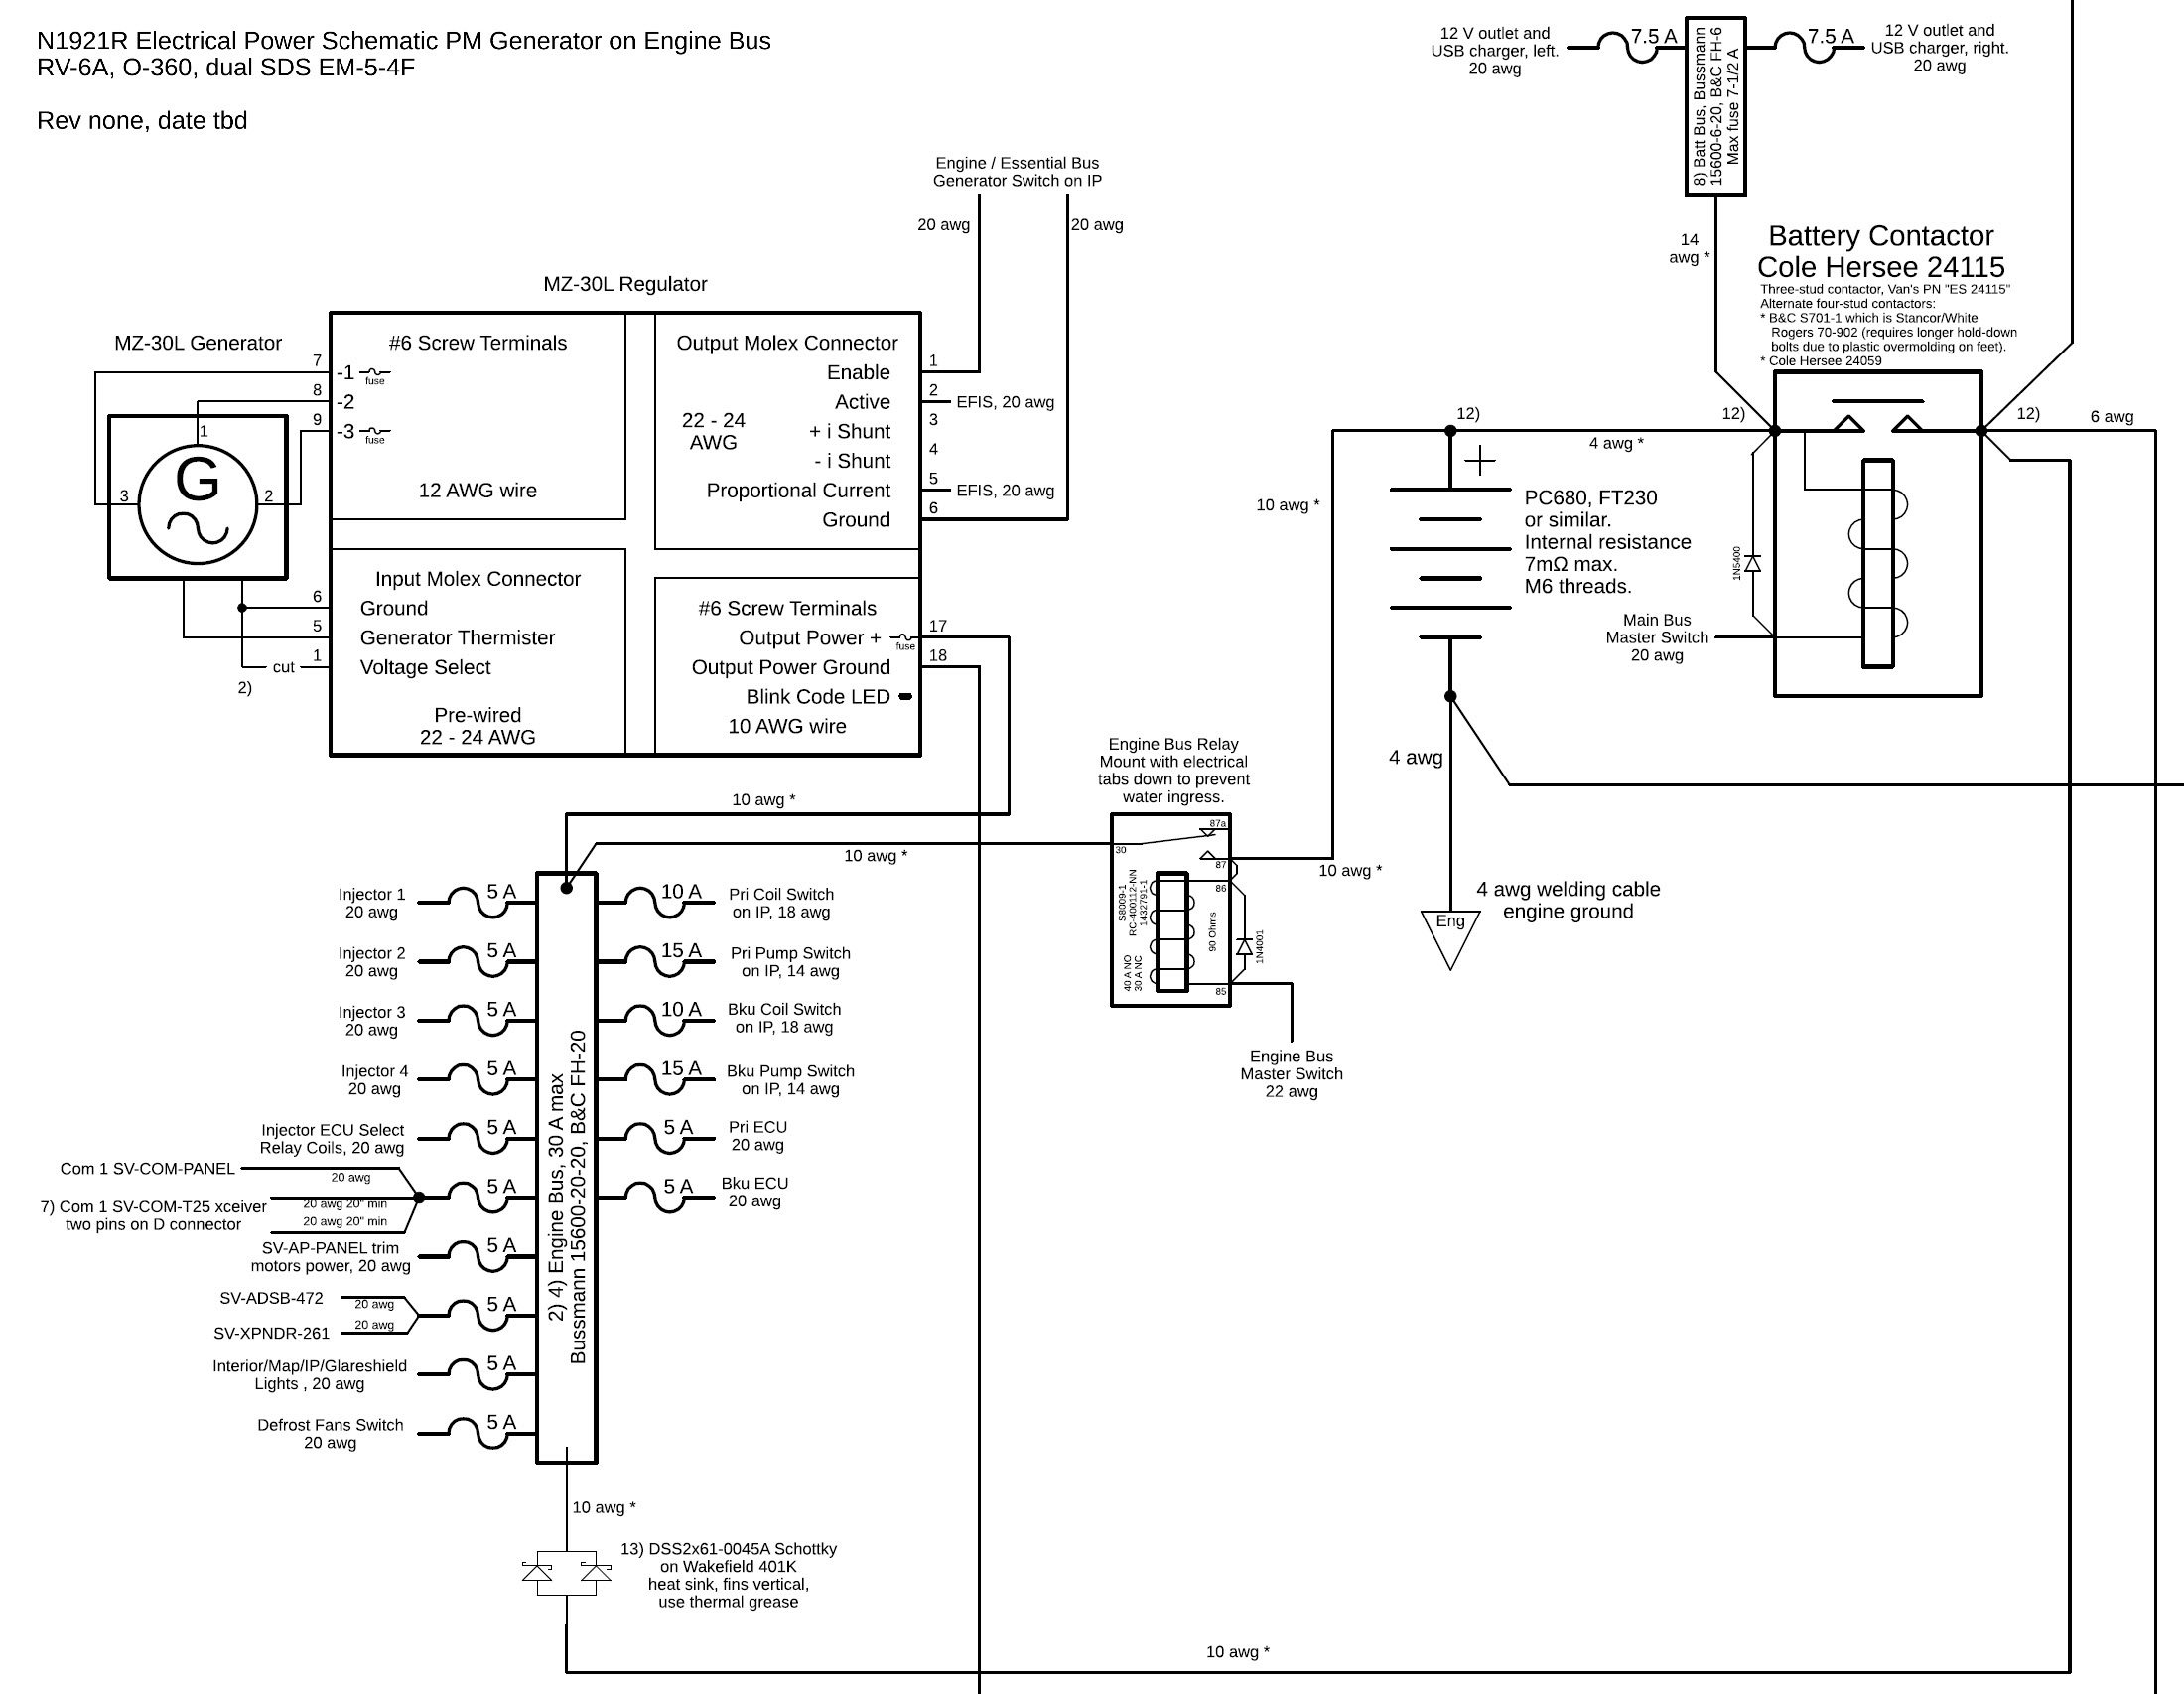 N1921R electrical power schematic snip.jpg